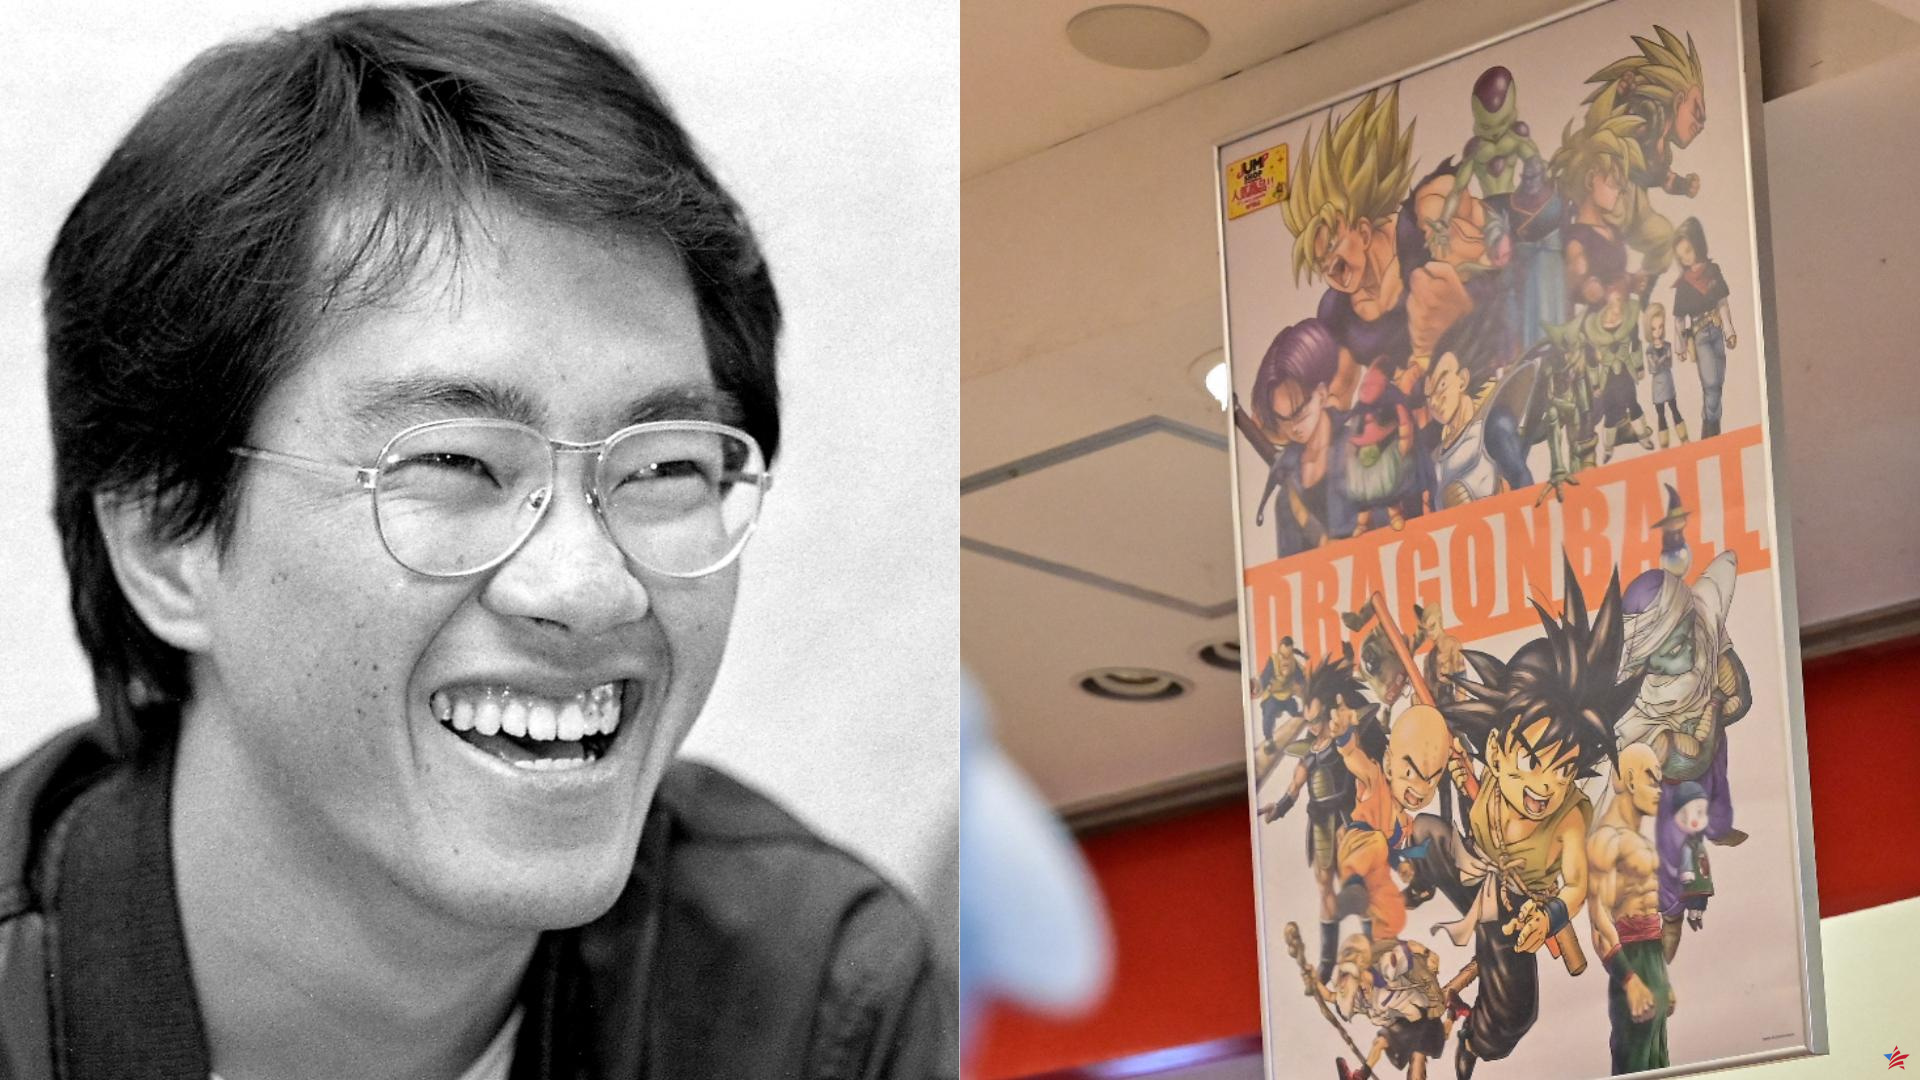 “Ha fallecido un mentor”: el mundo del cómic rinde homenaje a Akira Toriyama, creador de Dragon Ball